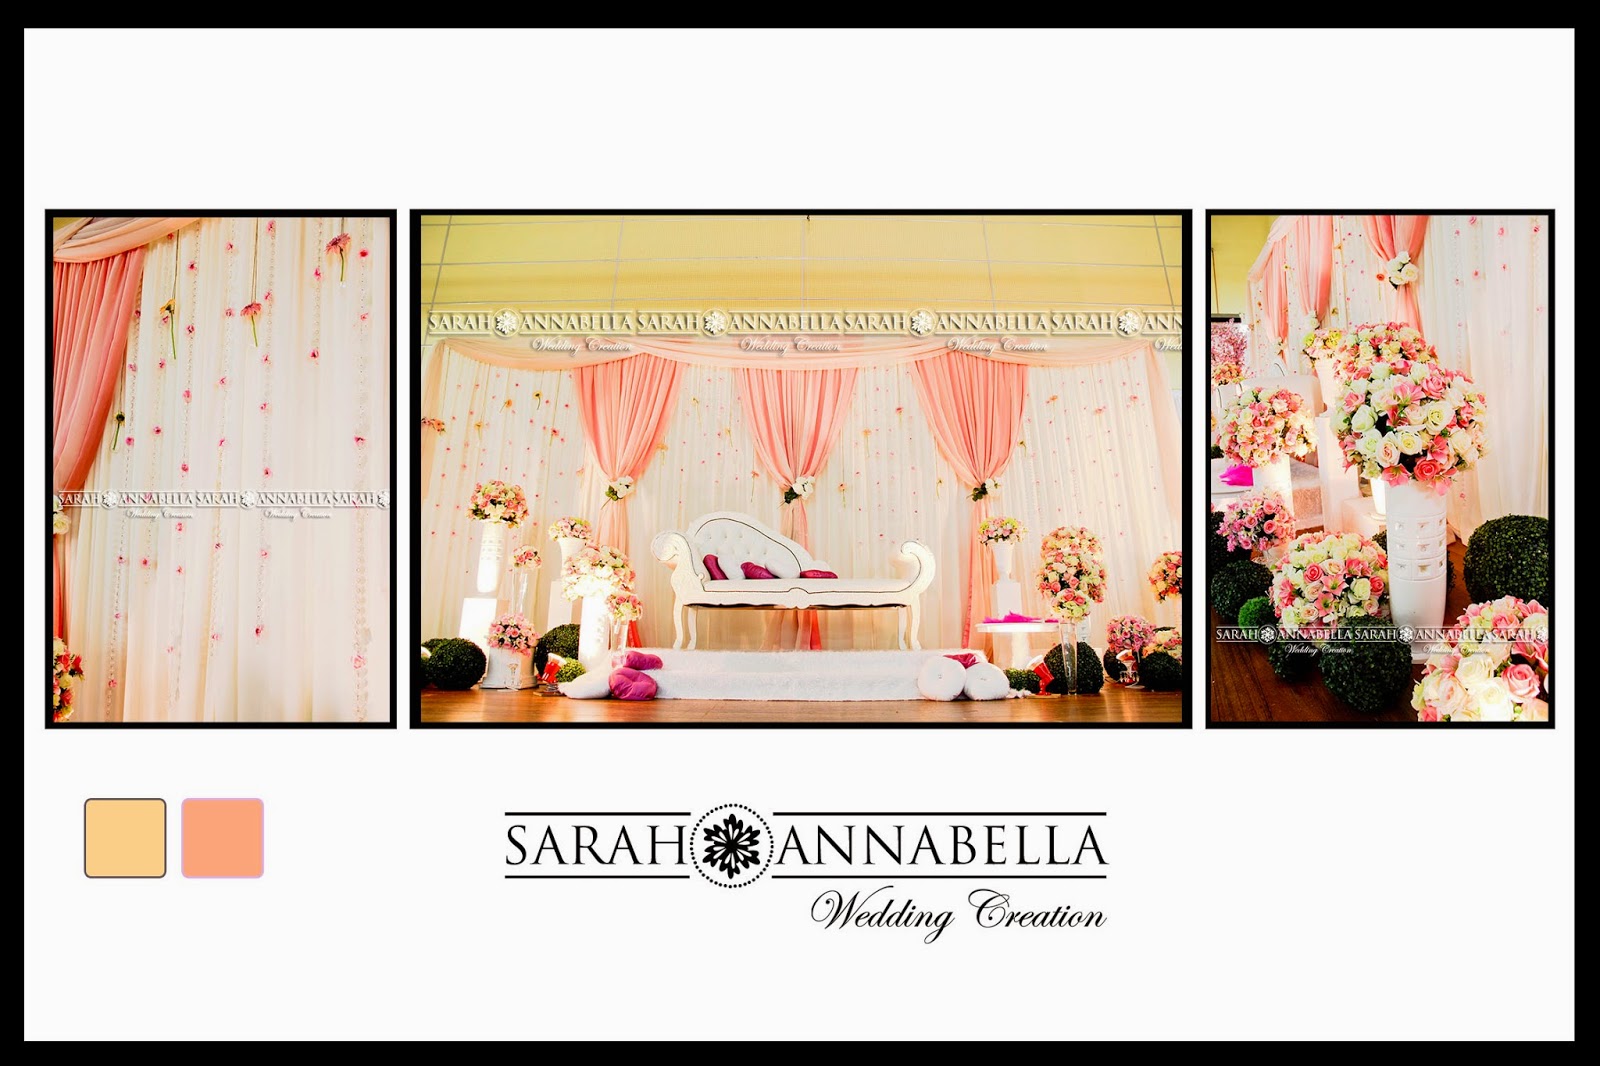 Sarah Annabella: Nur Fatihah & Saiful Asli Wedding Banquet ...